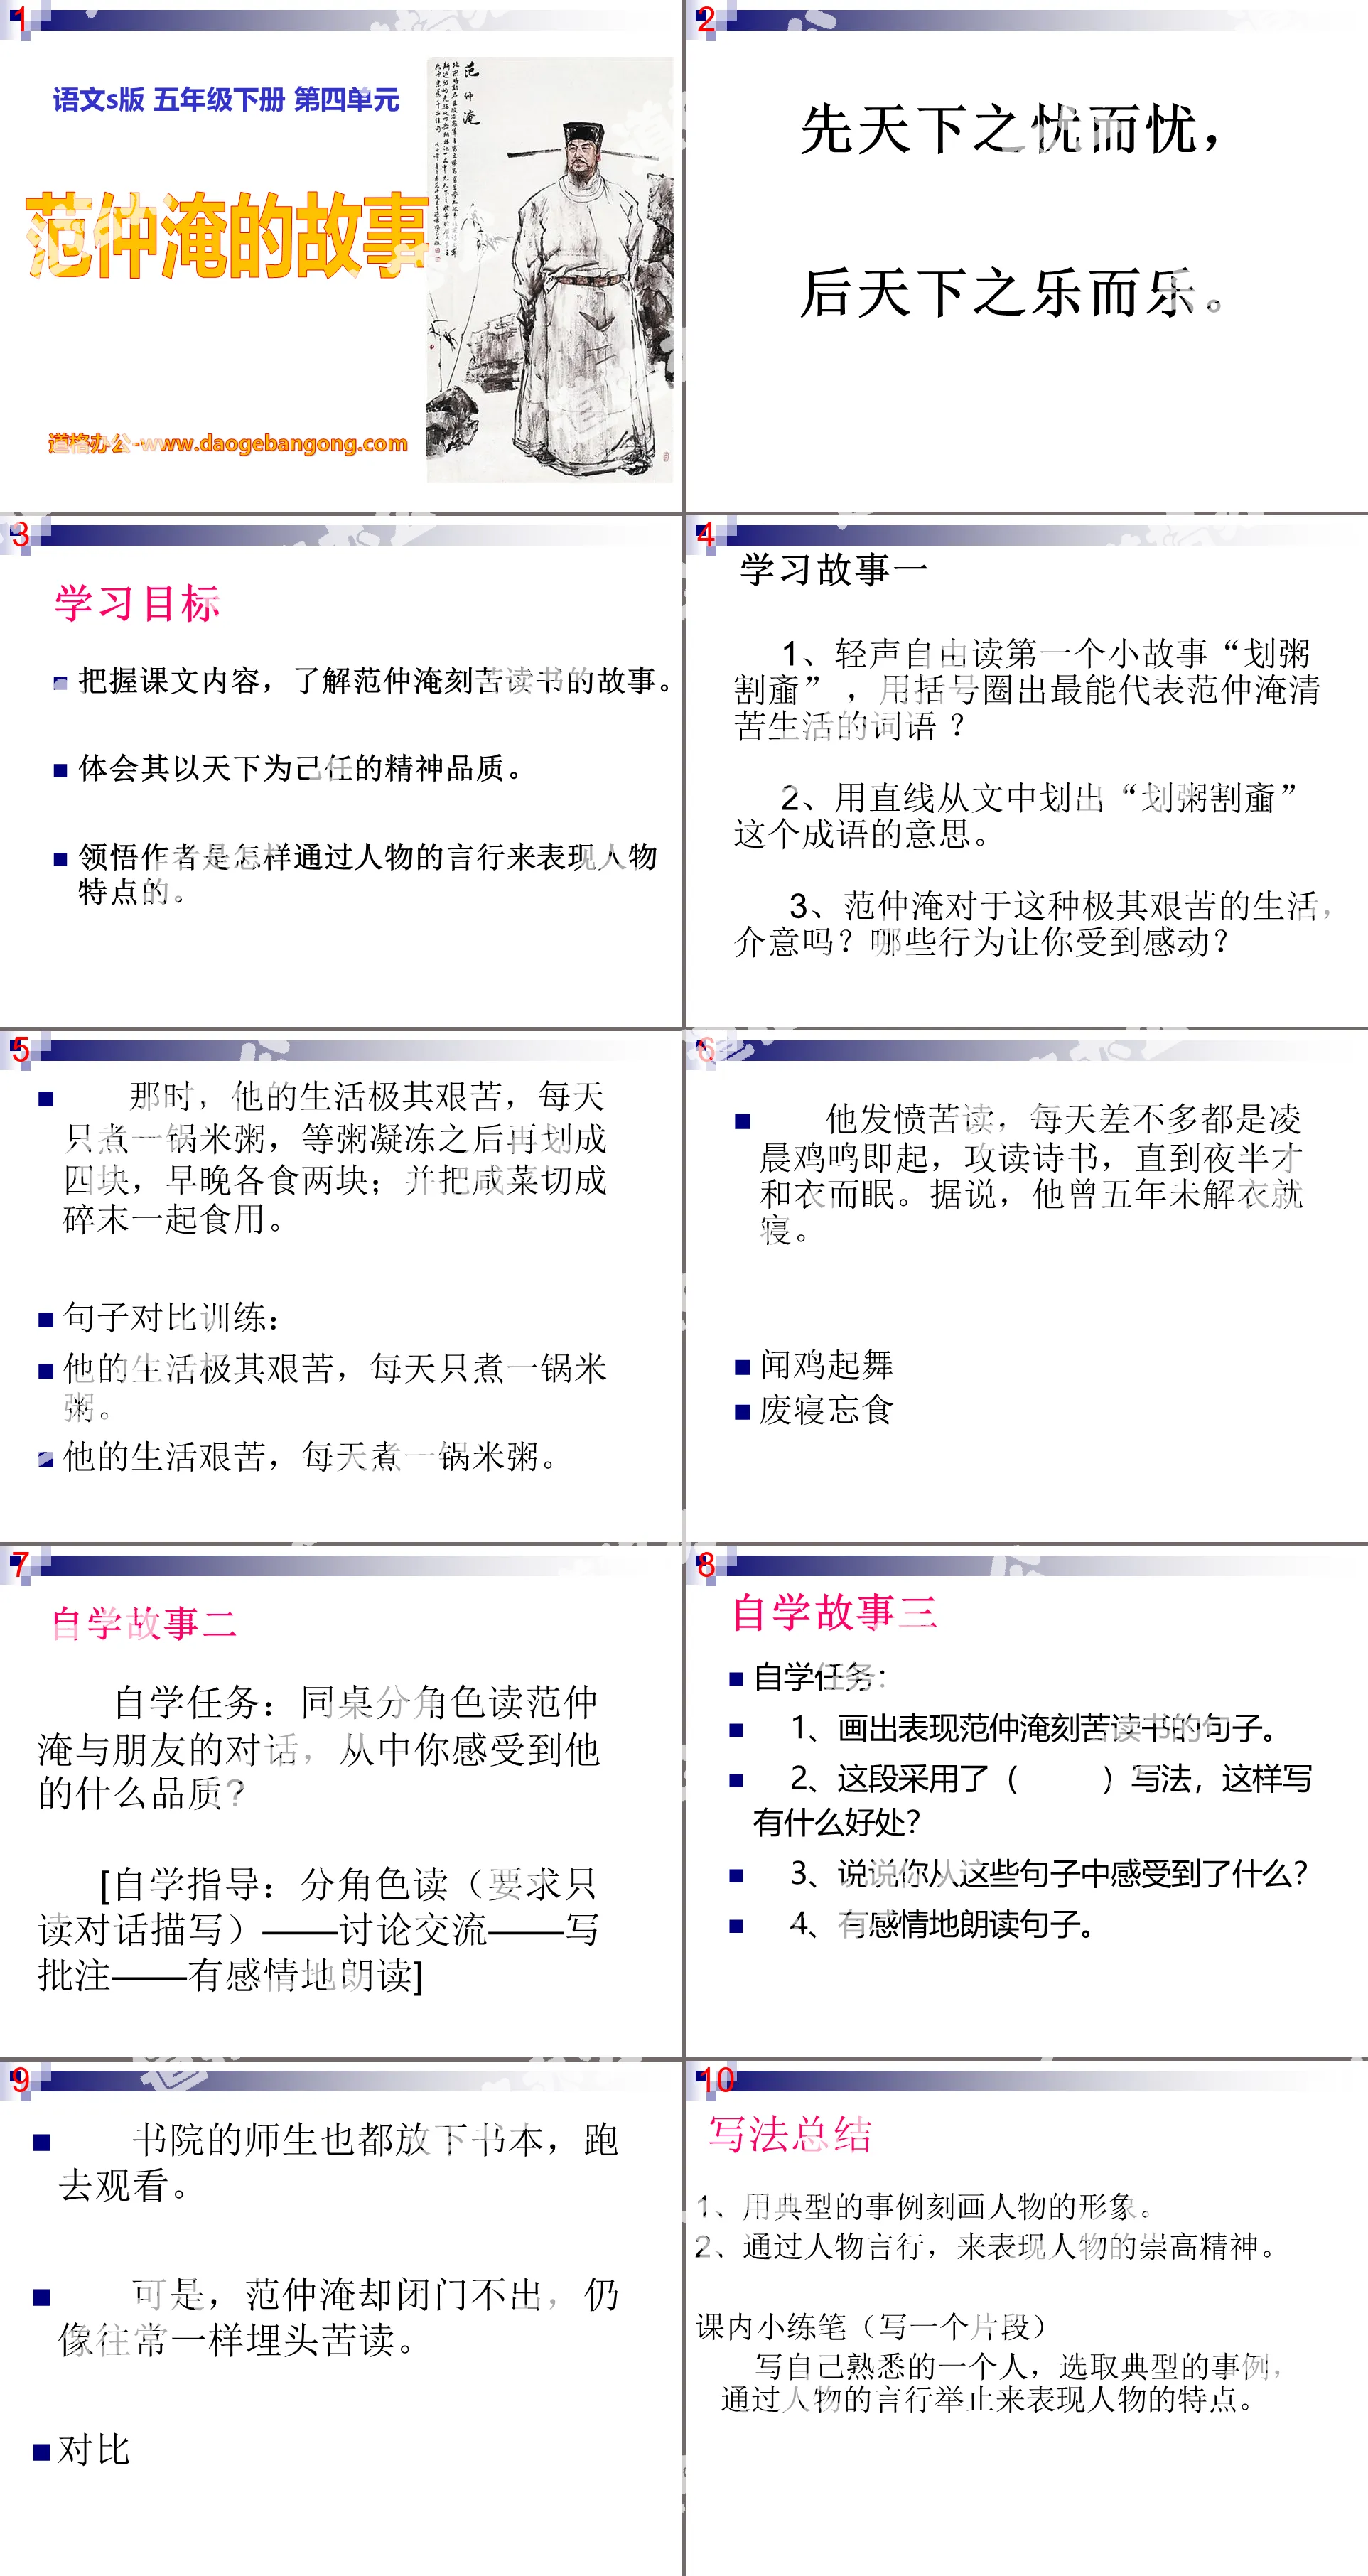 "The Story of Fan Zhongyan" PPT courseware 3